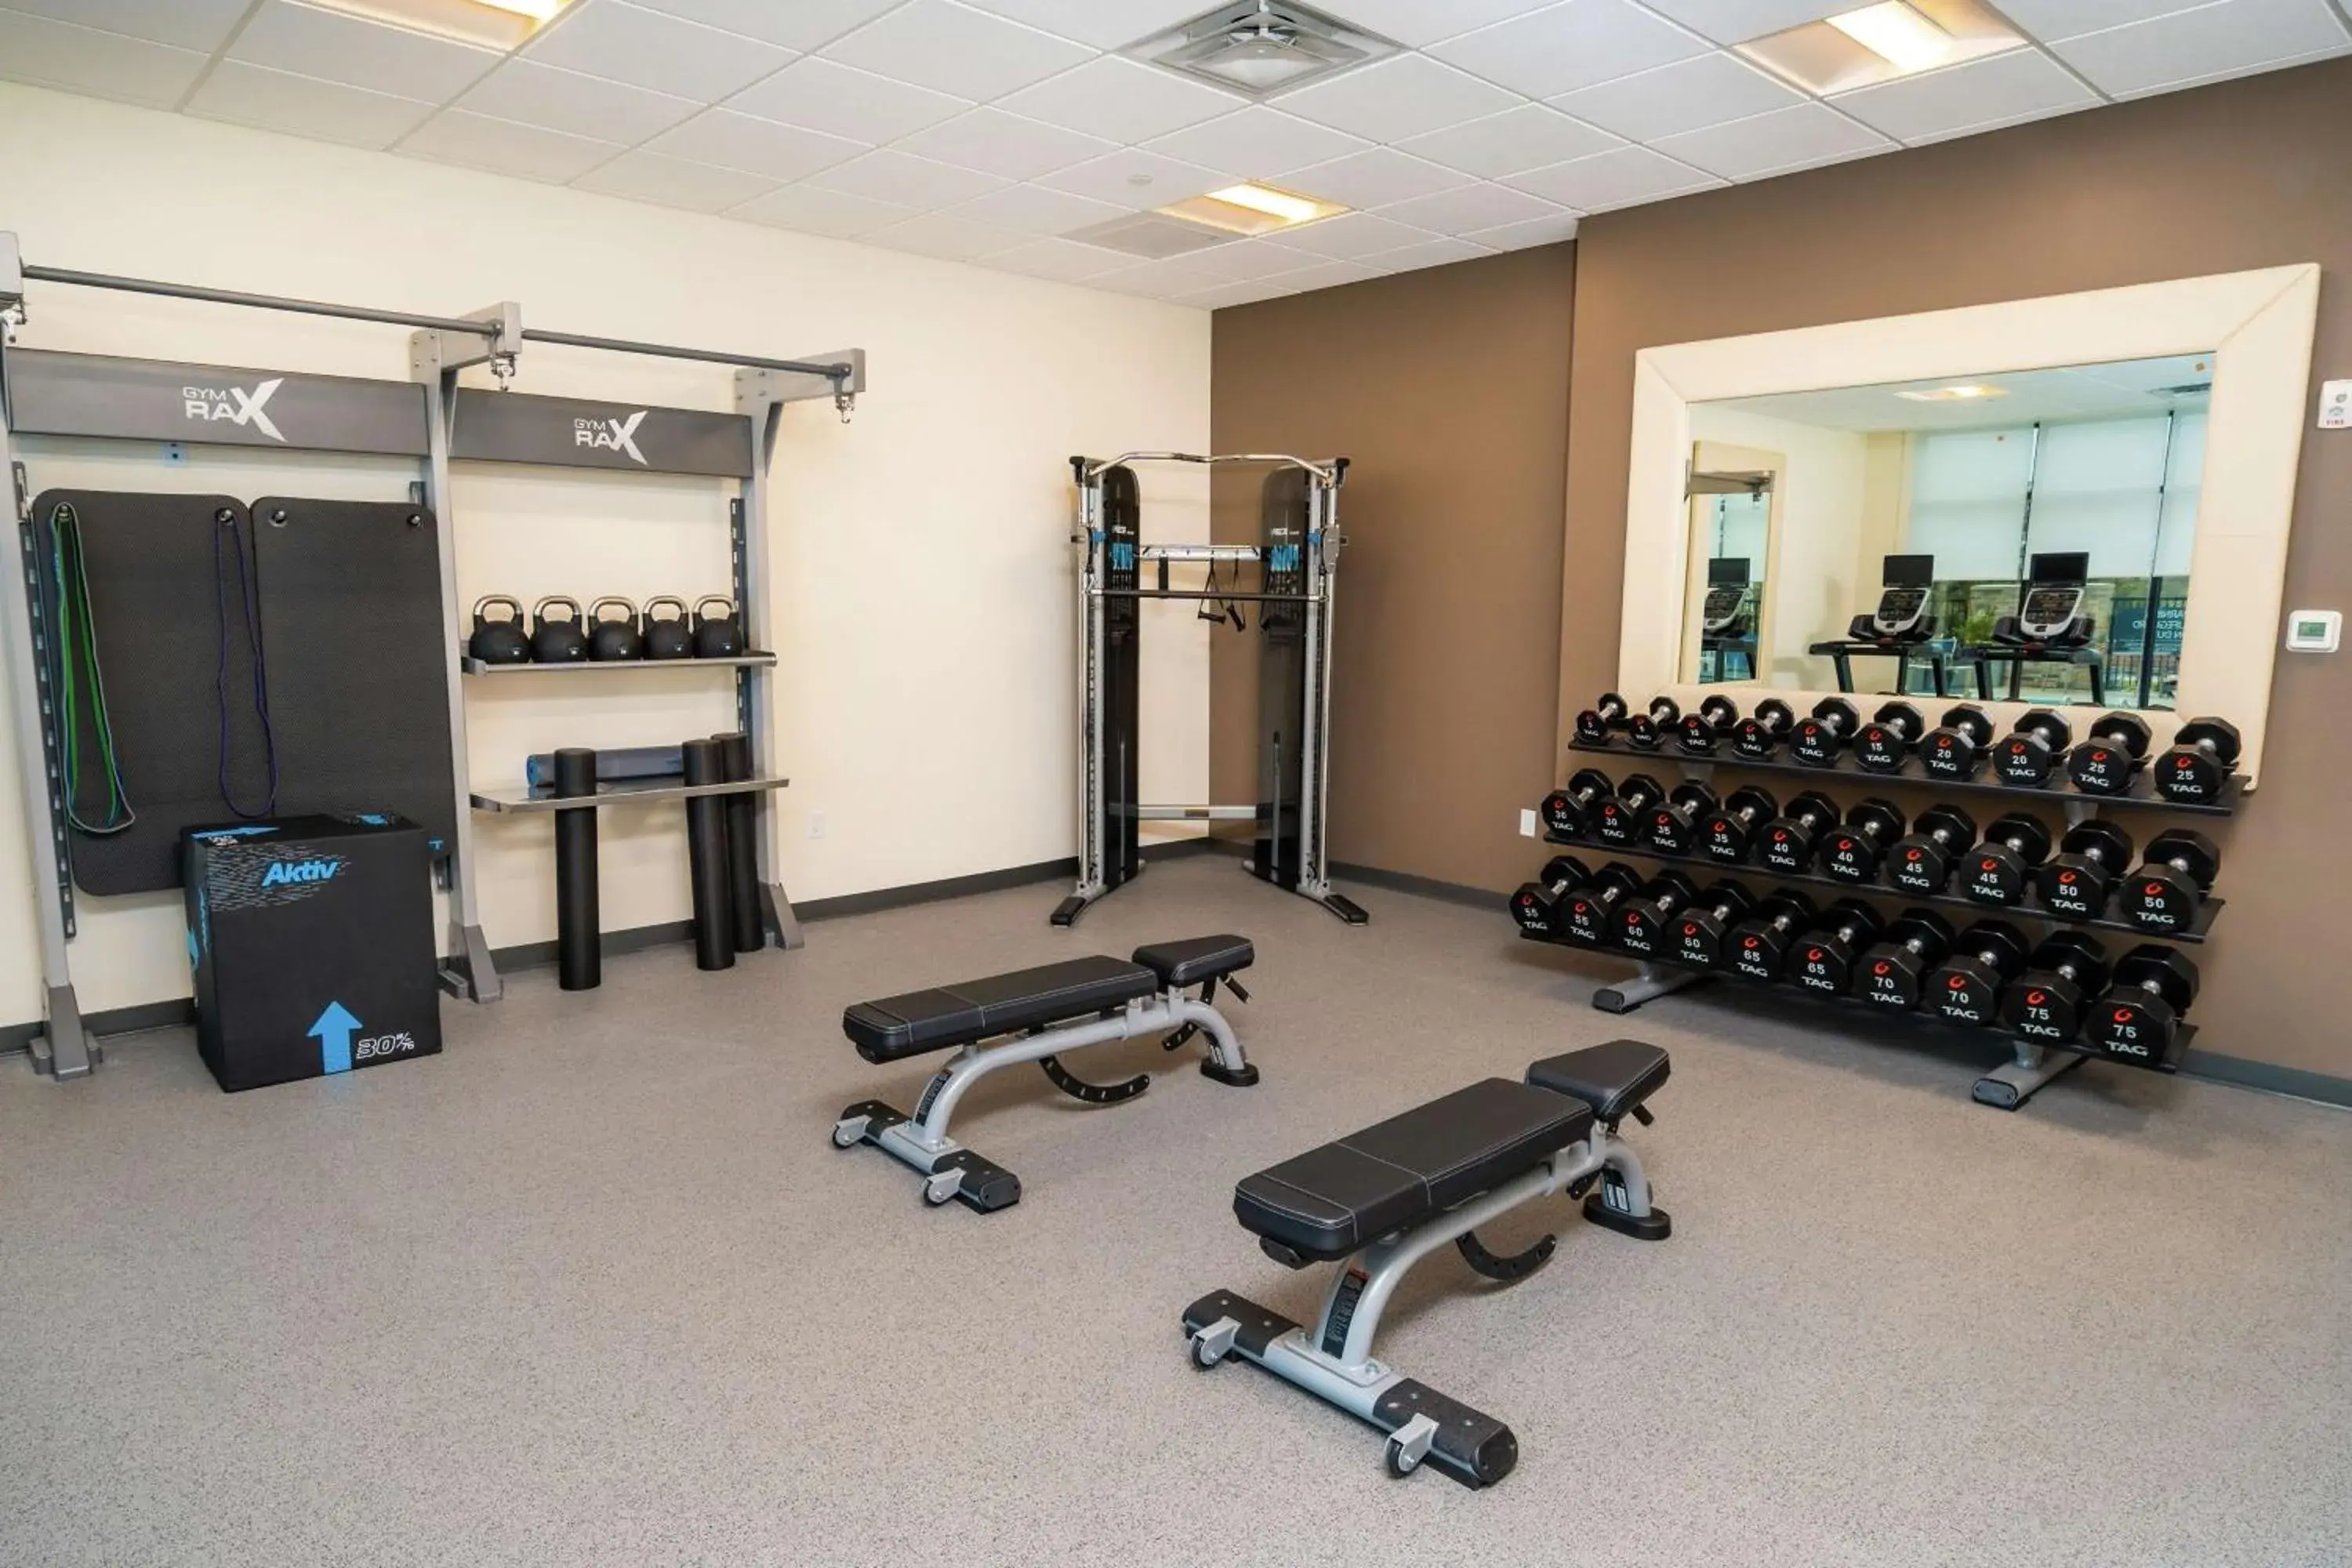 Fitness centre/facilities, Fitness Center/Facilities in Hilton Garden Inn Cedar Park Austin